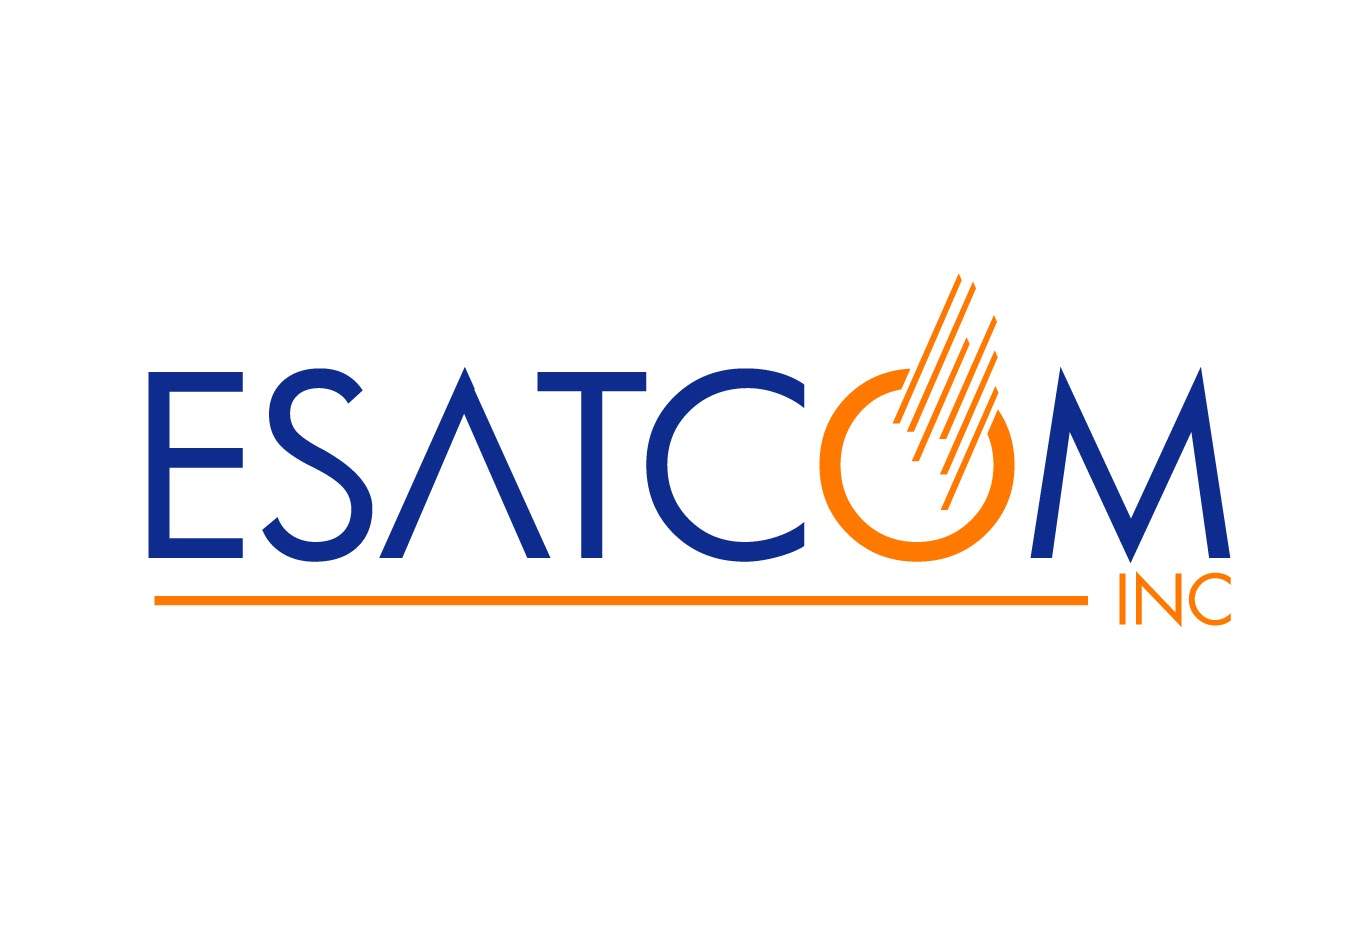 Photo of Esatcom Inc. in Jamaica City, New York, United States - 1 Picture of Point of interest, Establishment